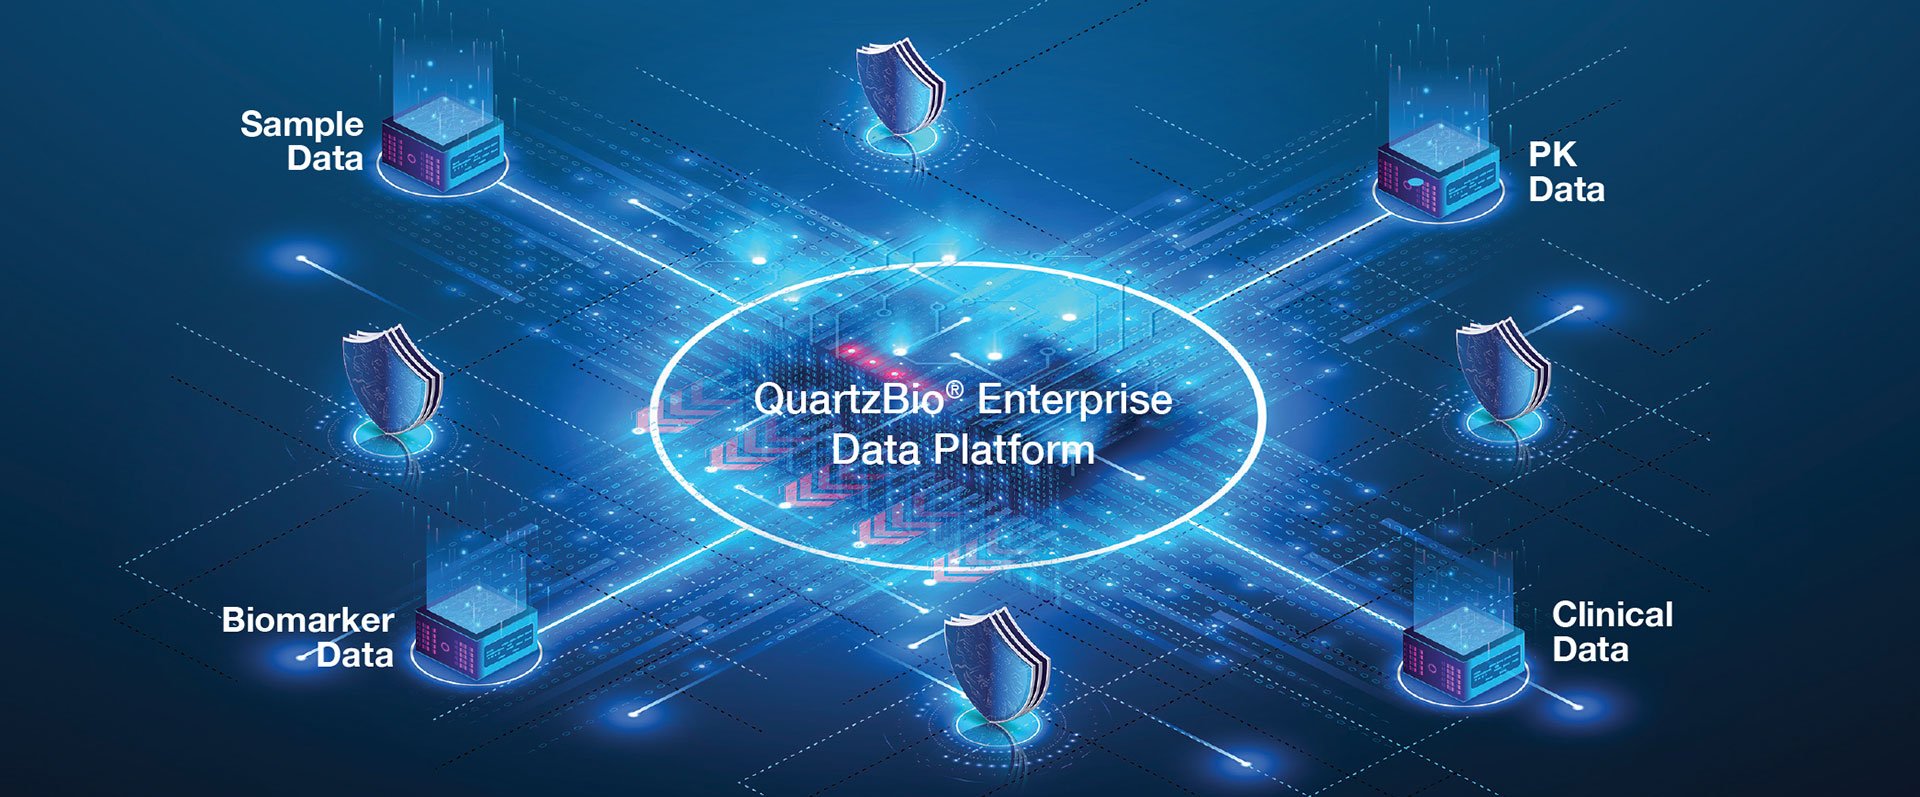 QB_data_platform_image